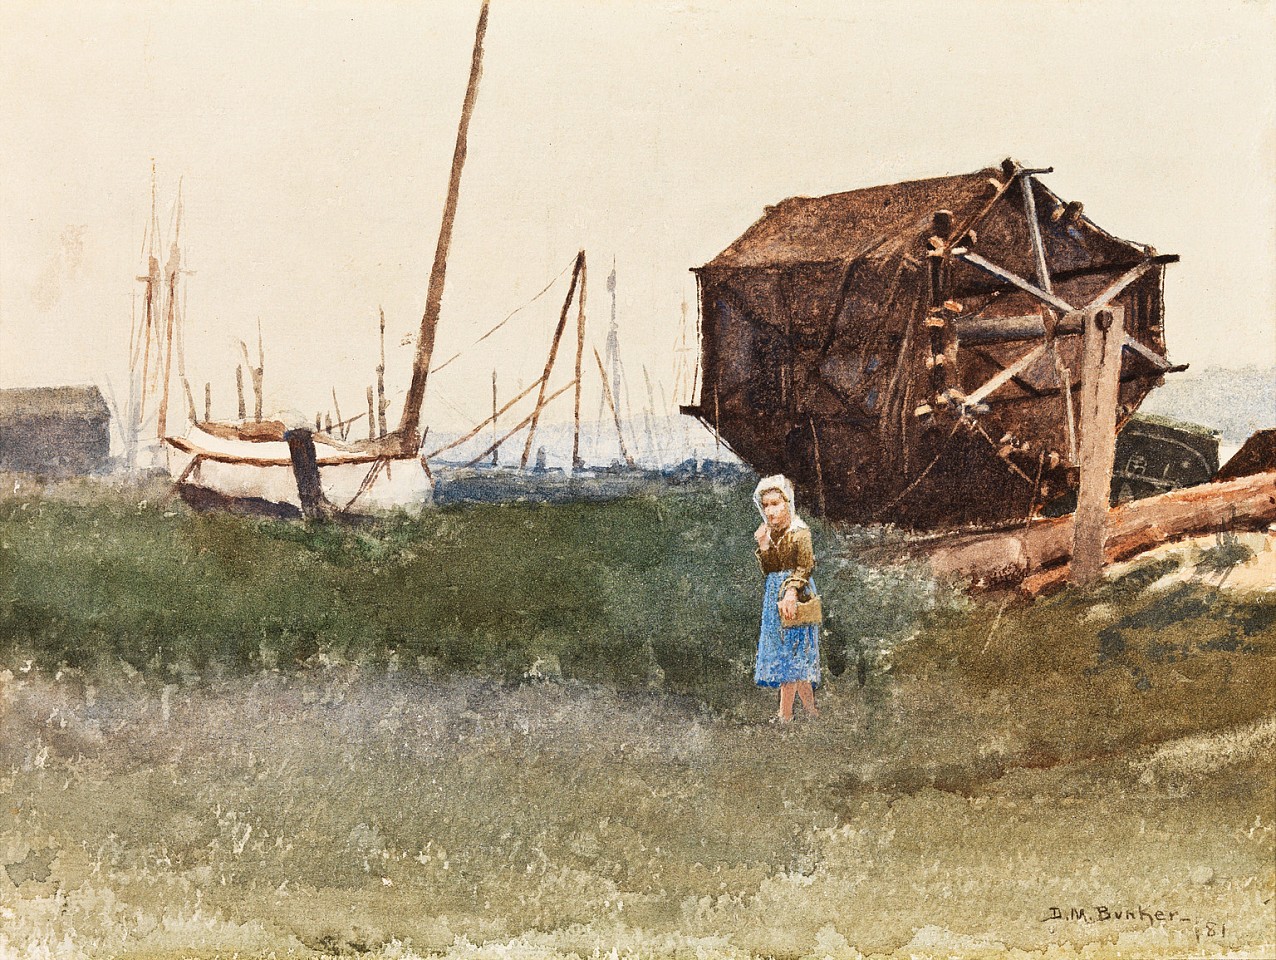 Dennis Miller Bunker, The Fisher Girl, Nantucket, 1881
watercolor on paper, 9 1/4 x 12 1/2 in. (23.5 x 31.8 cm)
DB190401